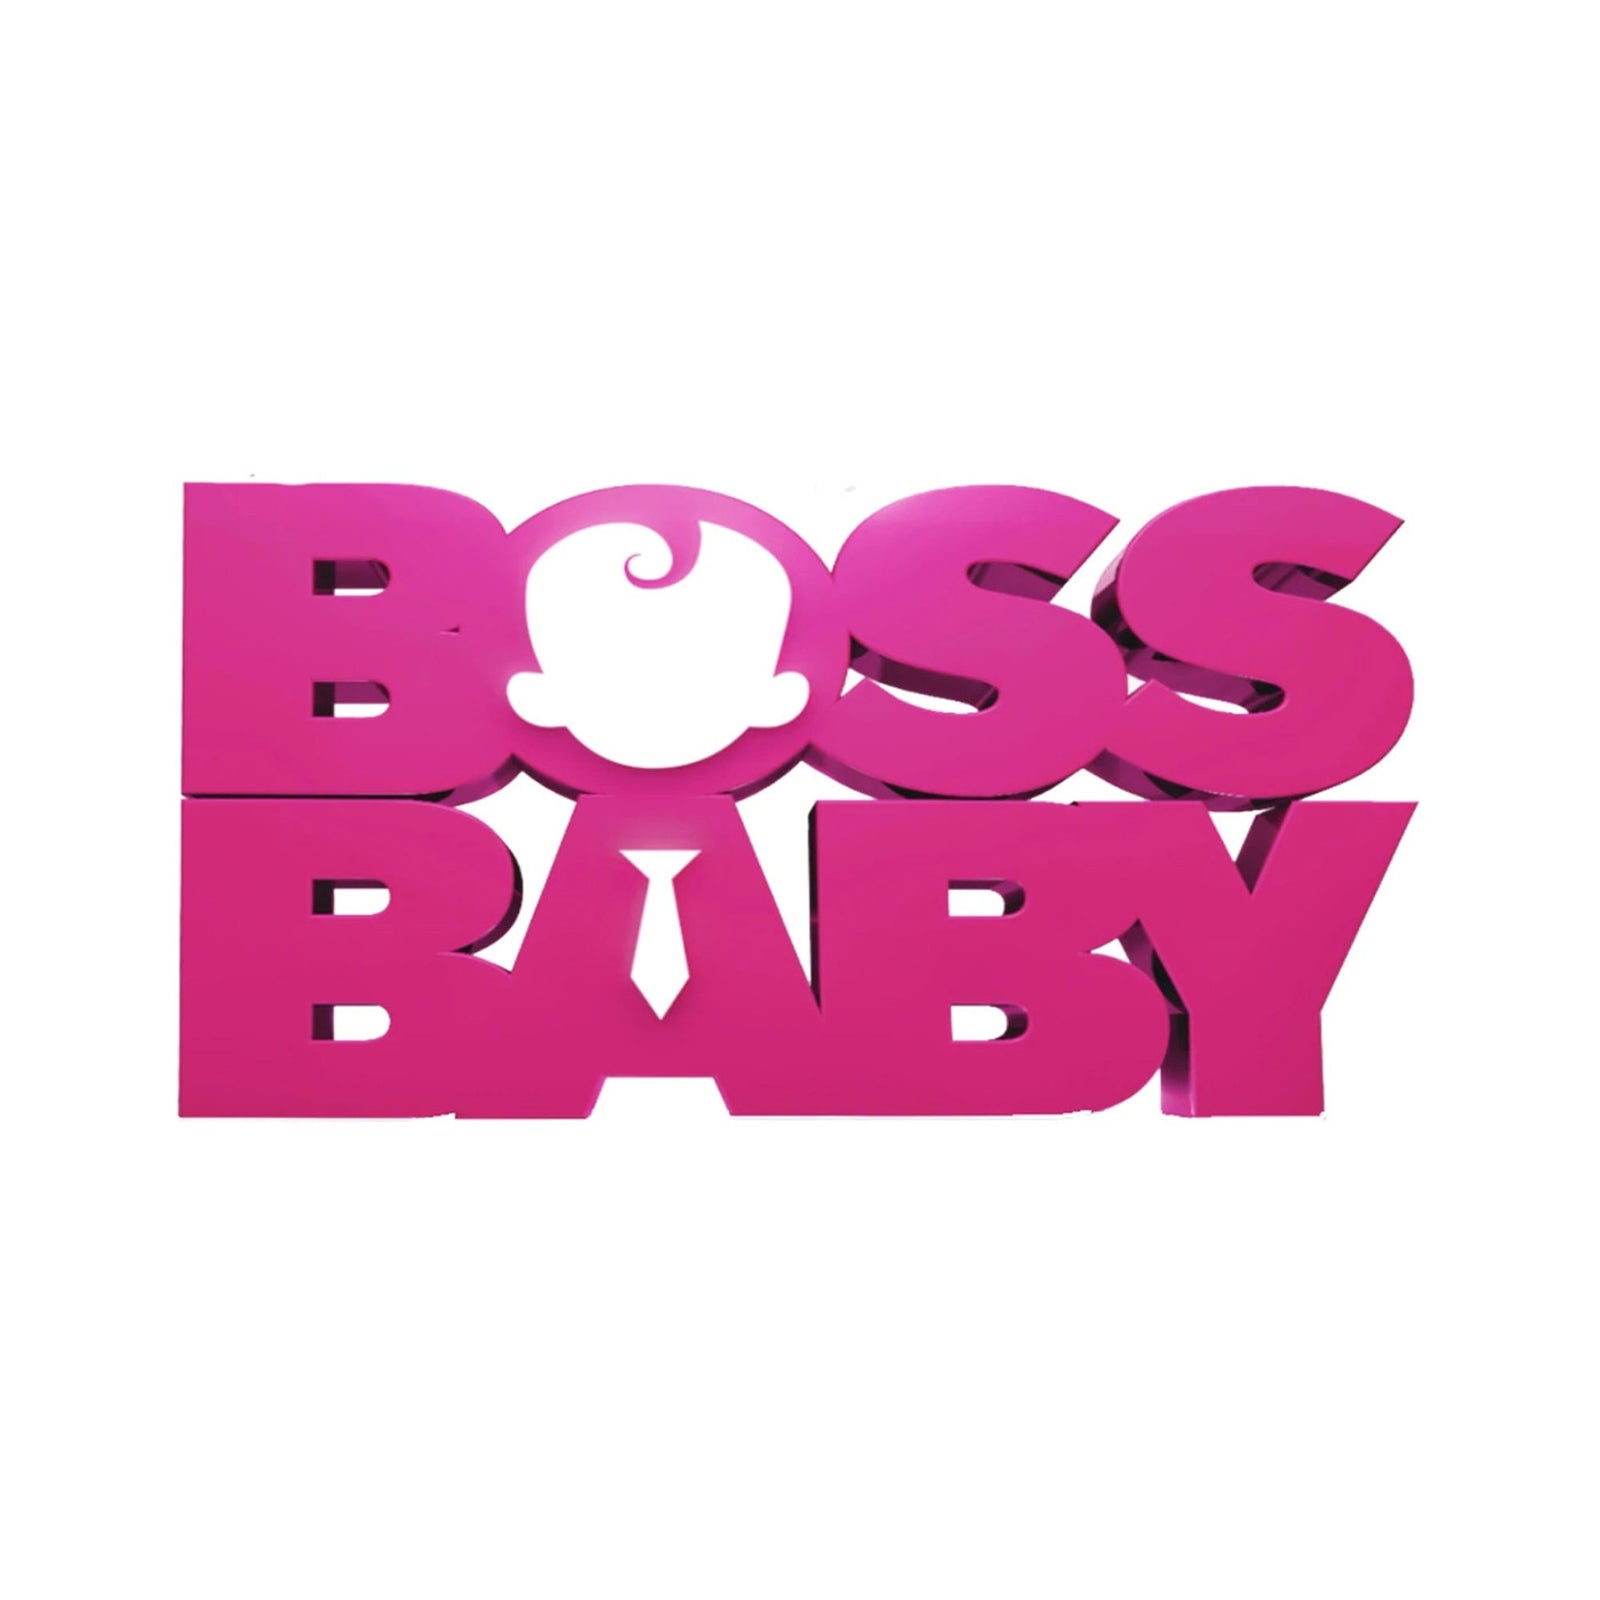 Boss Baby Girls Cutouts - (10 Pieces)